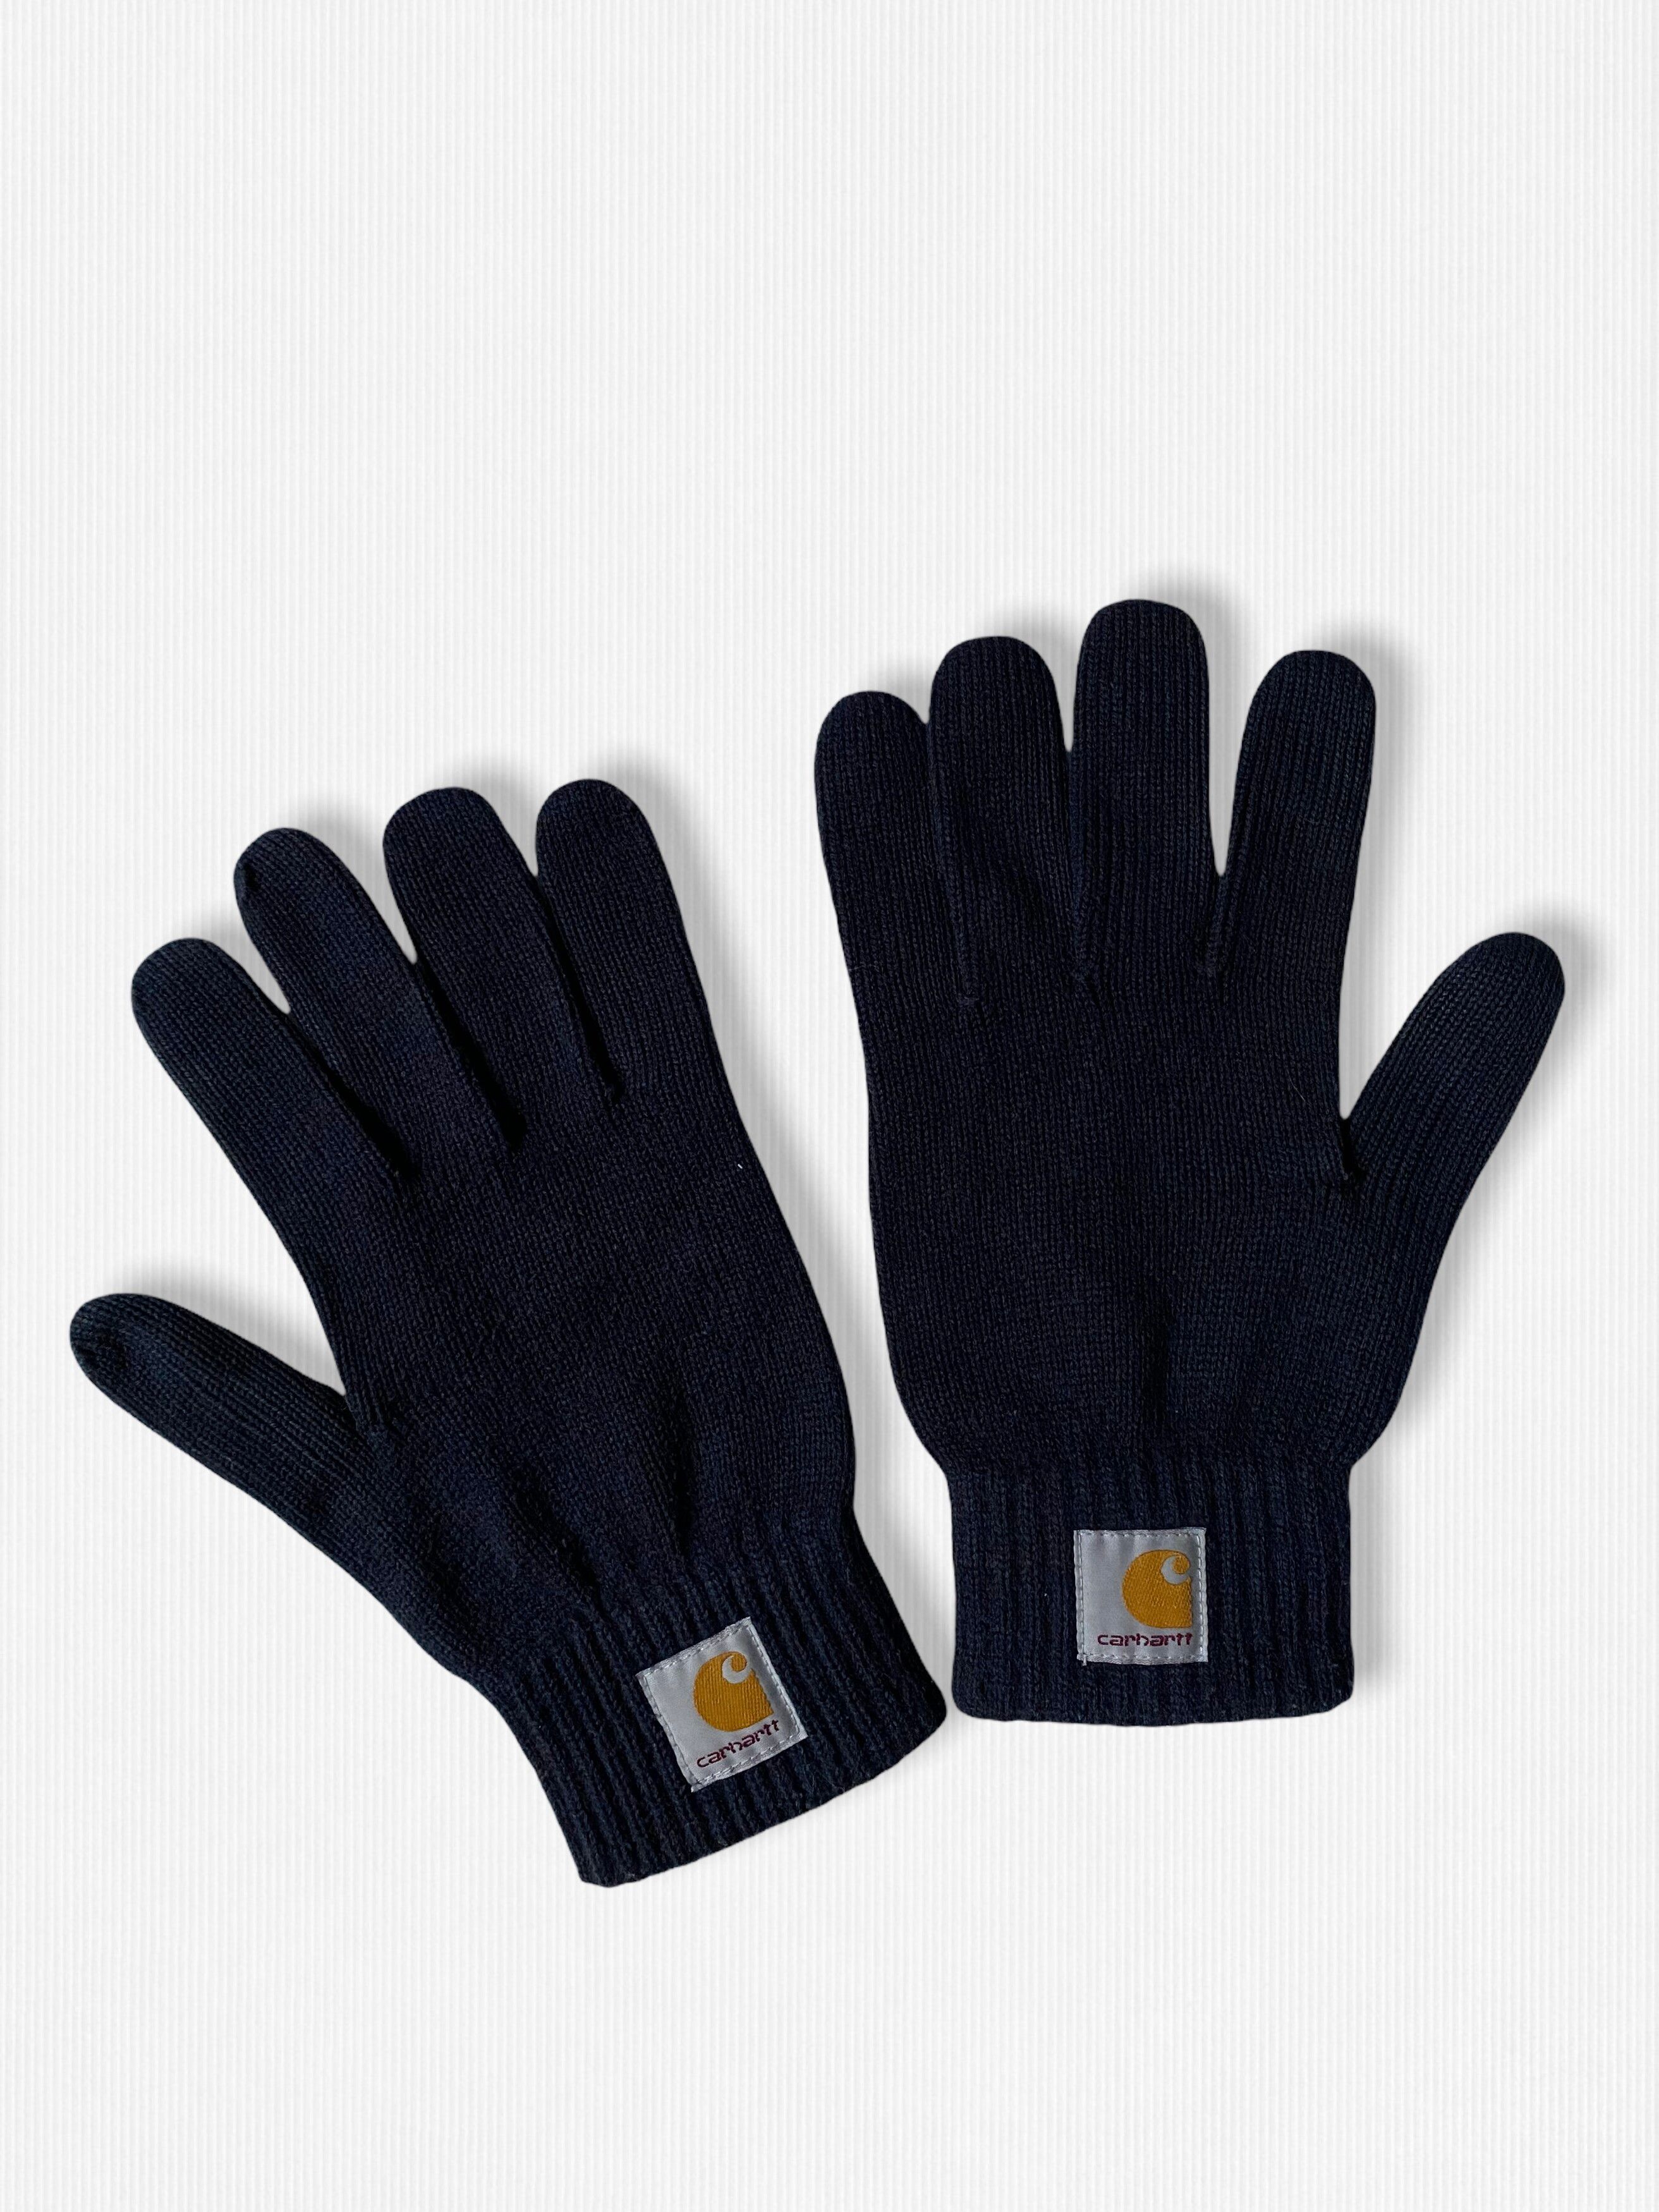 Carhartt Carhartt WIP Watch Gloves | Grailed